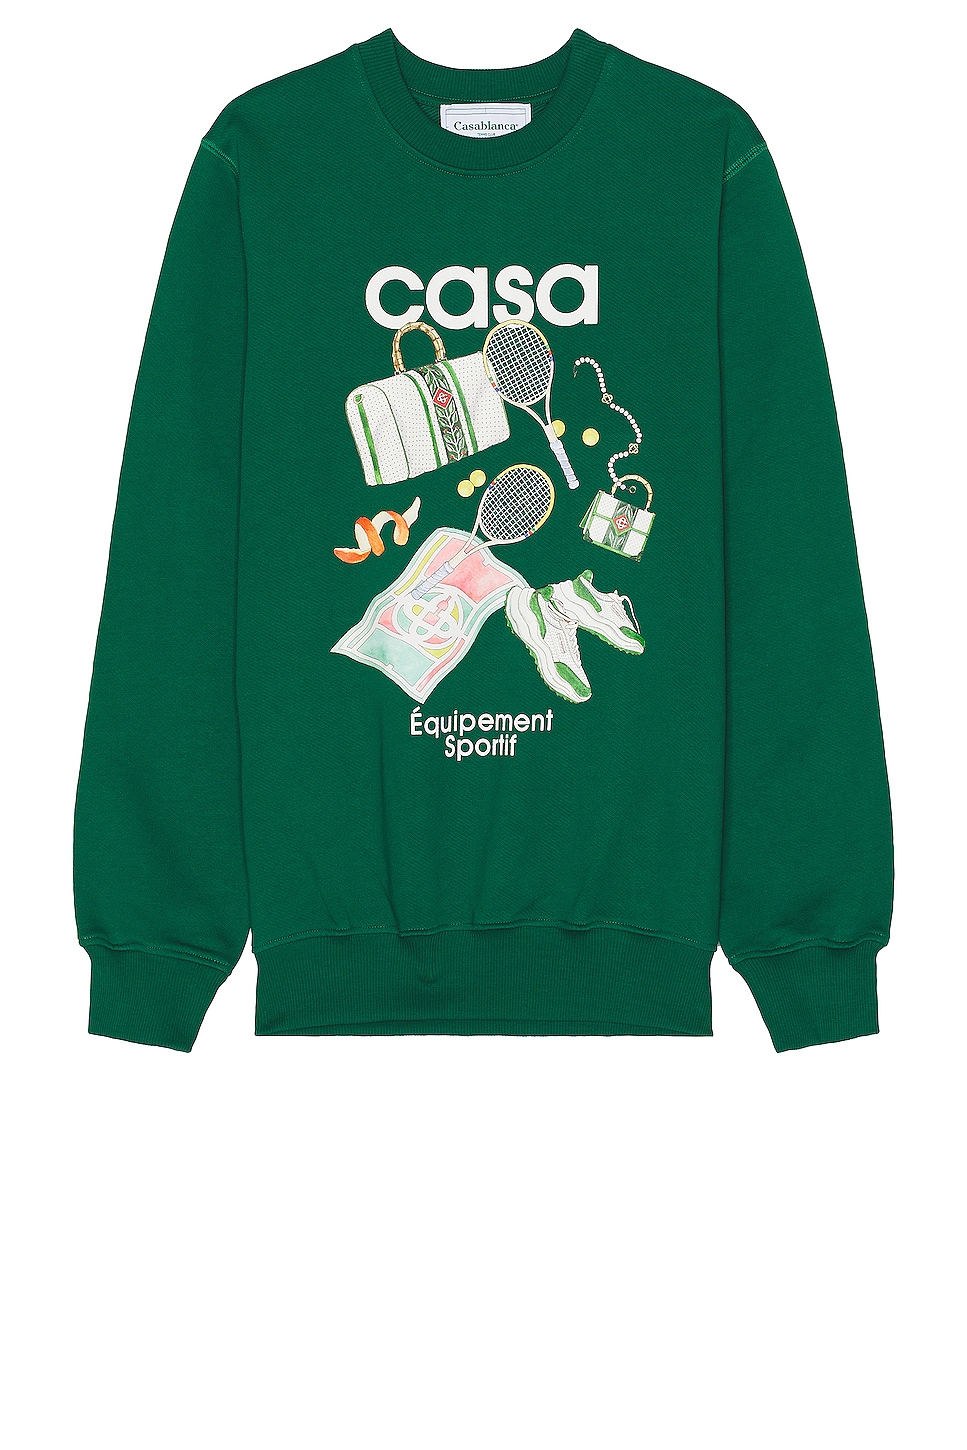 Image 1 of Casablanca Equipement Sportif Printed Sweatshirt in Evergreen